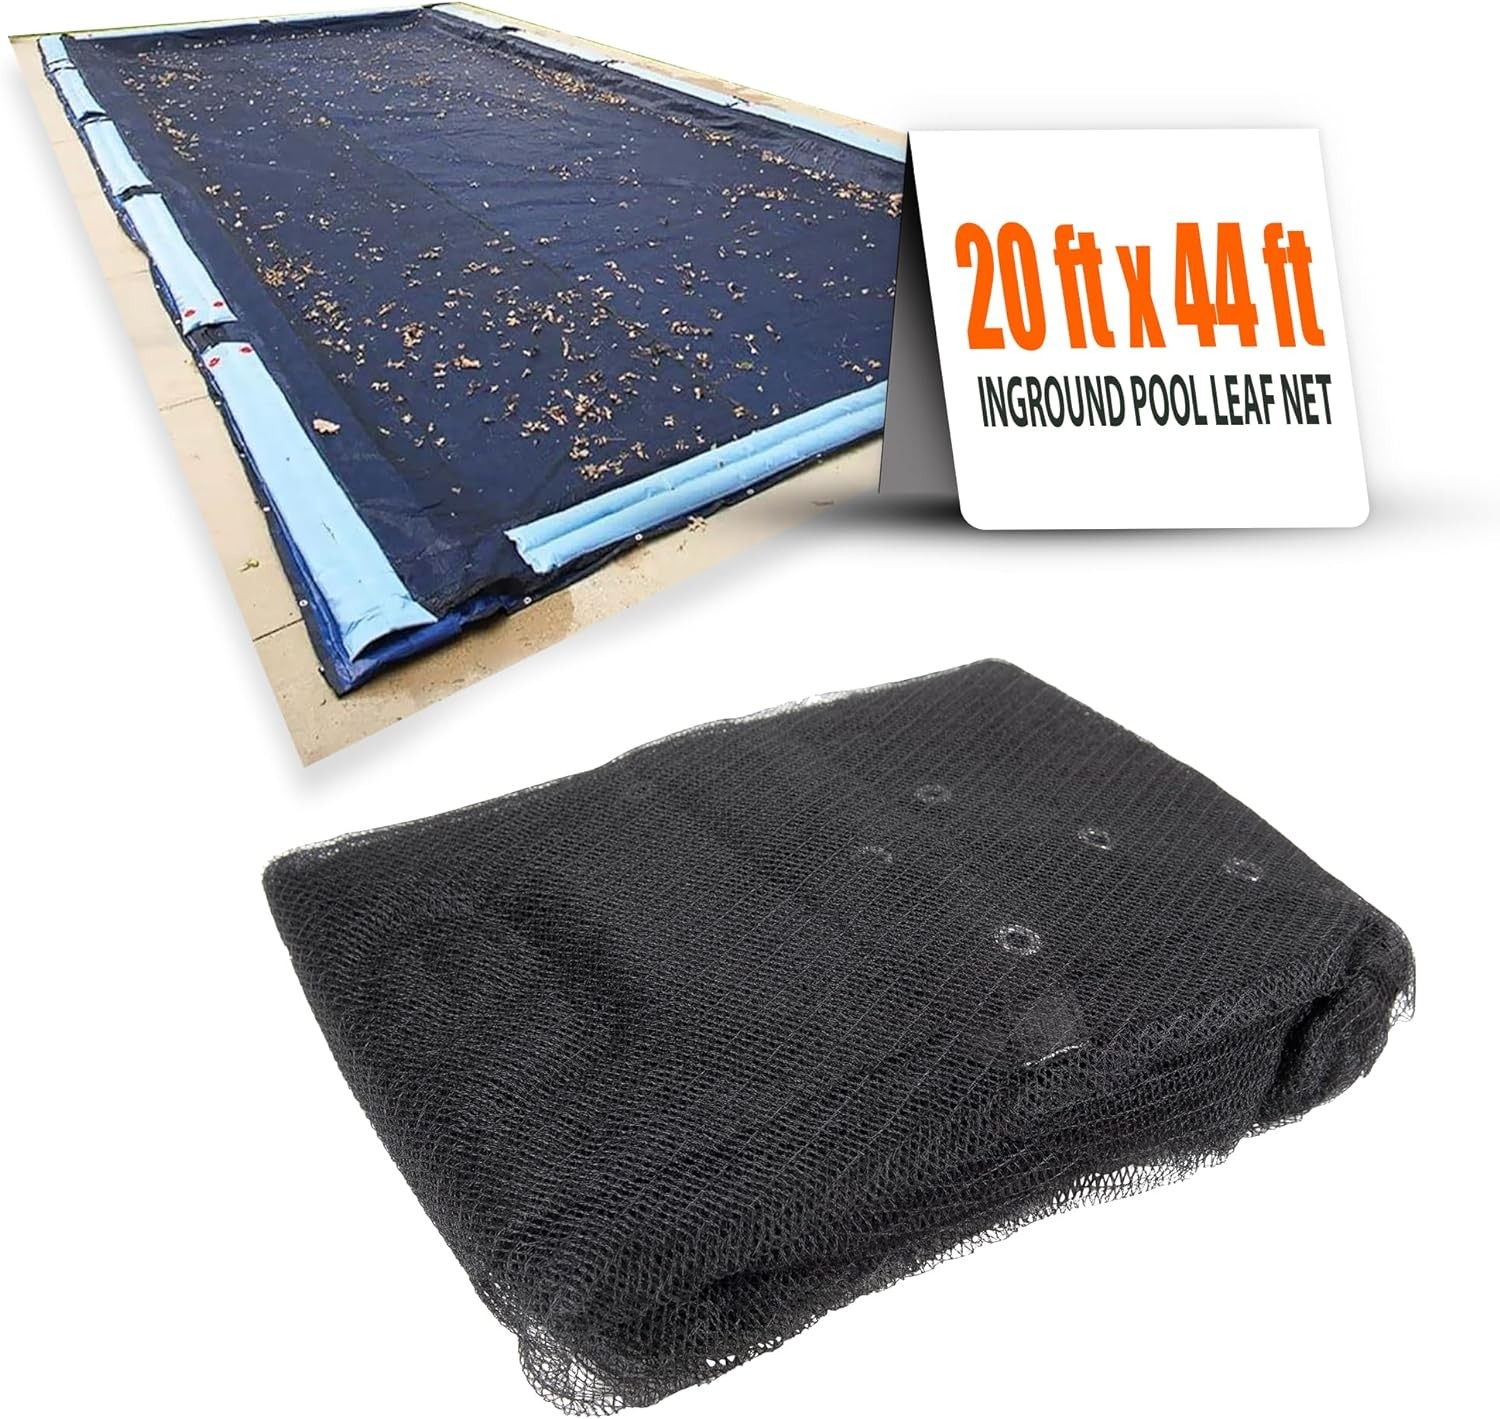 SET Sunsolar Energy Technologies Leaf Net Cover for 20 ft x 44 ft Rectangular Inground Swimming Pool with Extra 4 ft Overlap